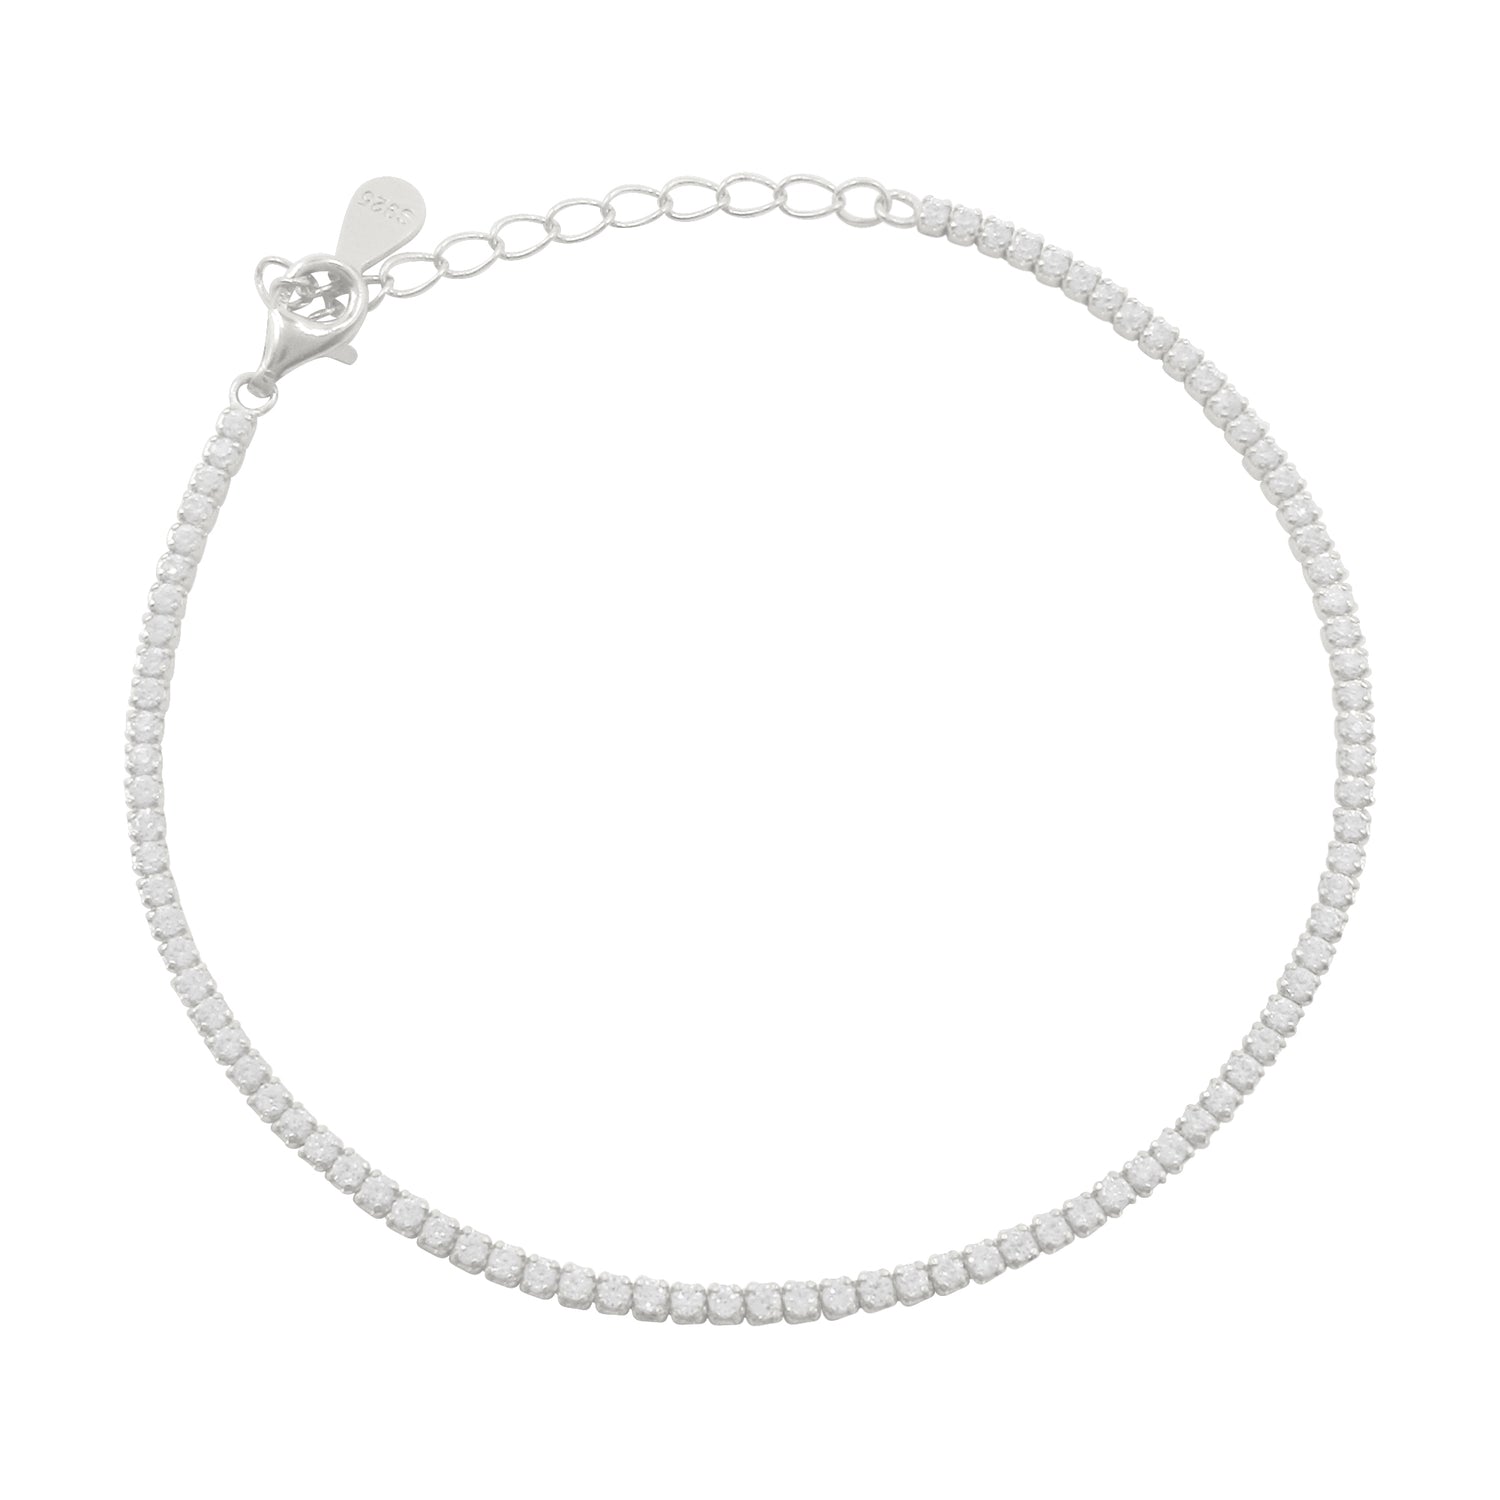 Pavé Tennis Bracelet - Bing Bang Jewelry NYC